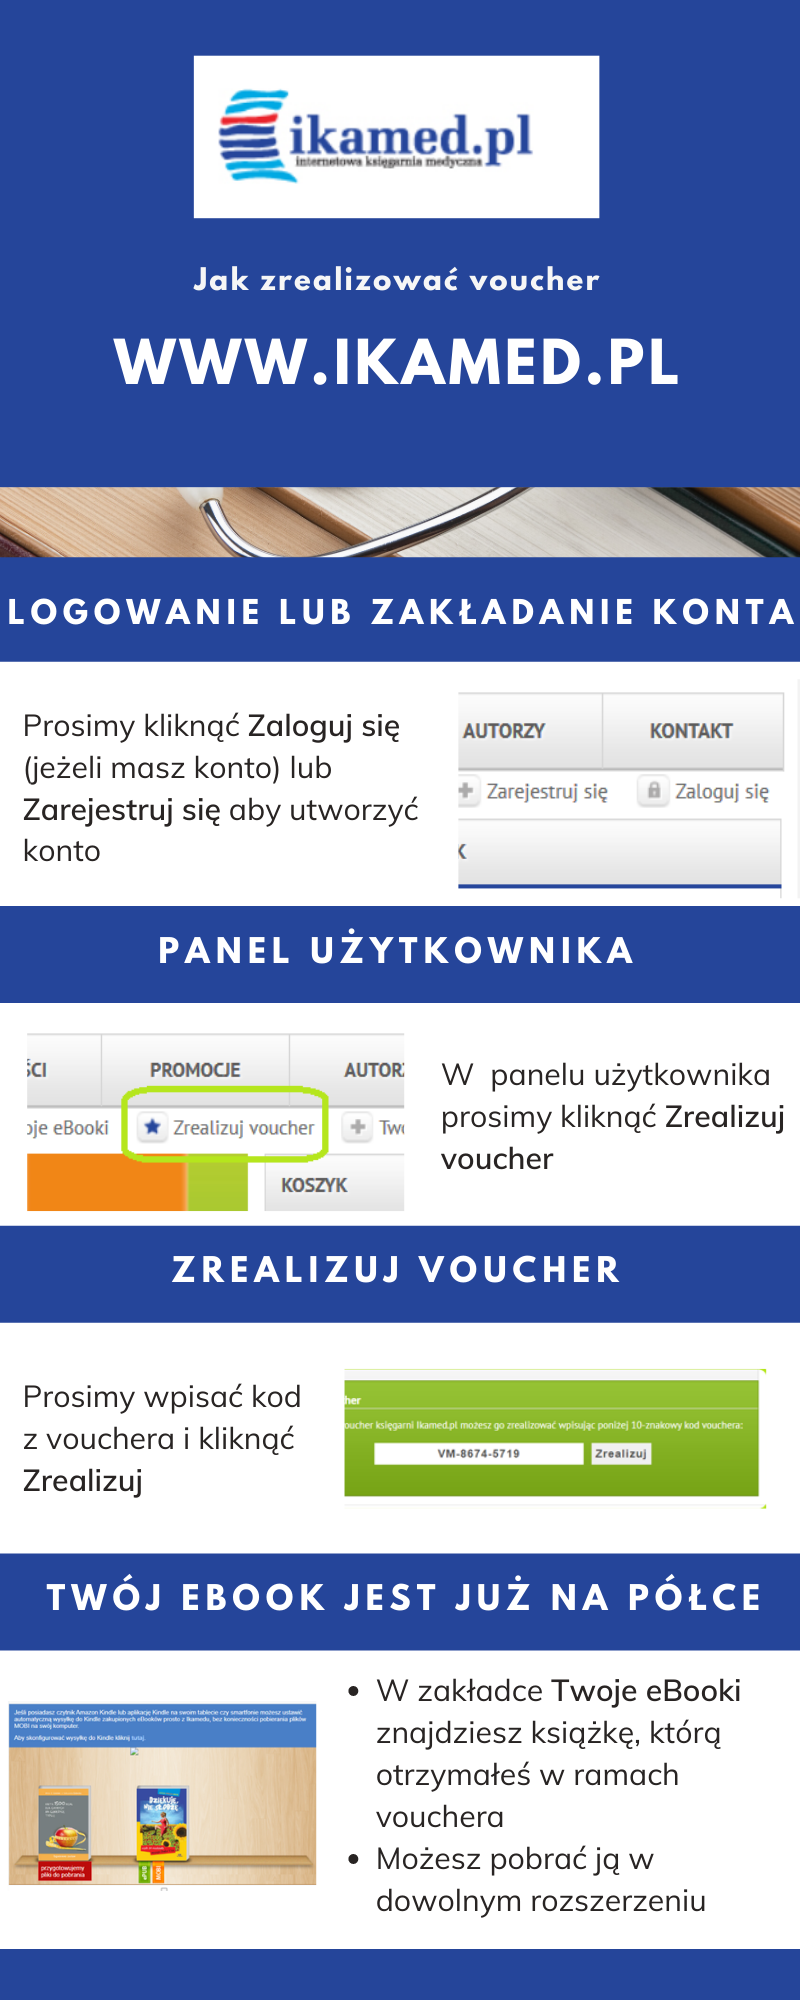 Infografika realizacji voucher w Ikamed.png